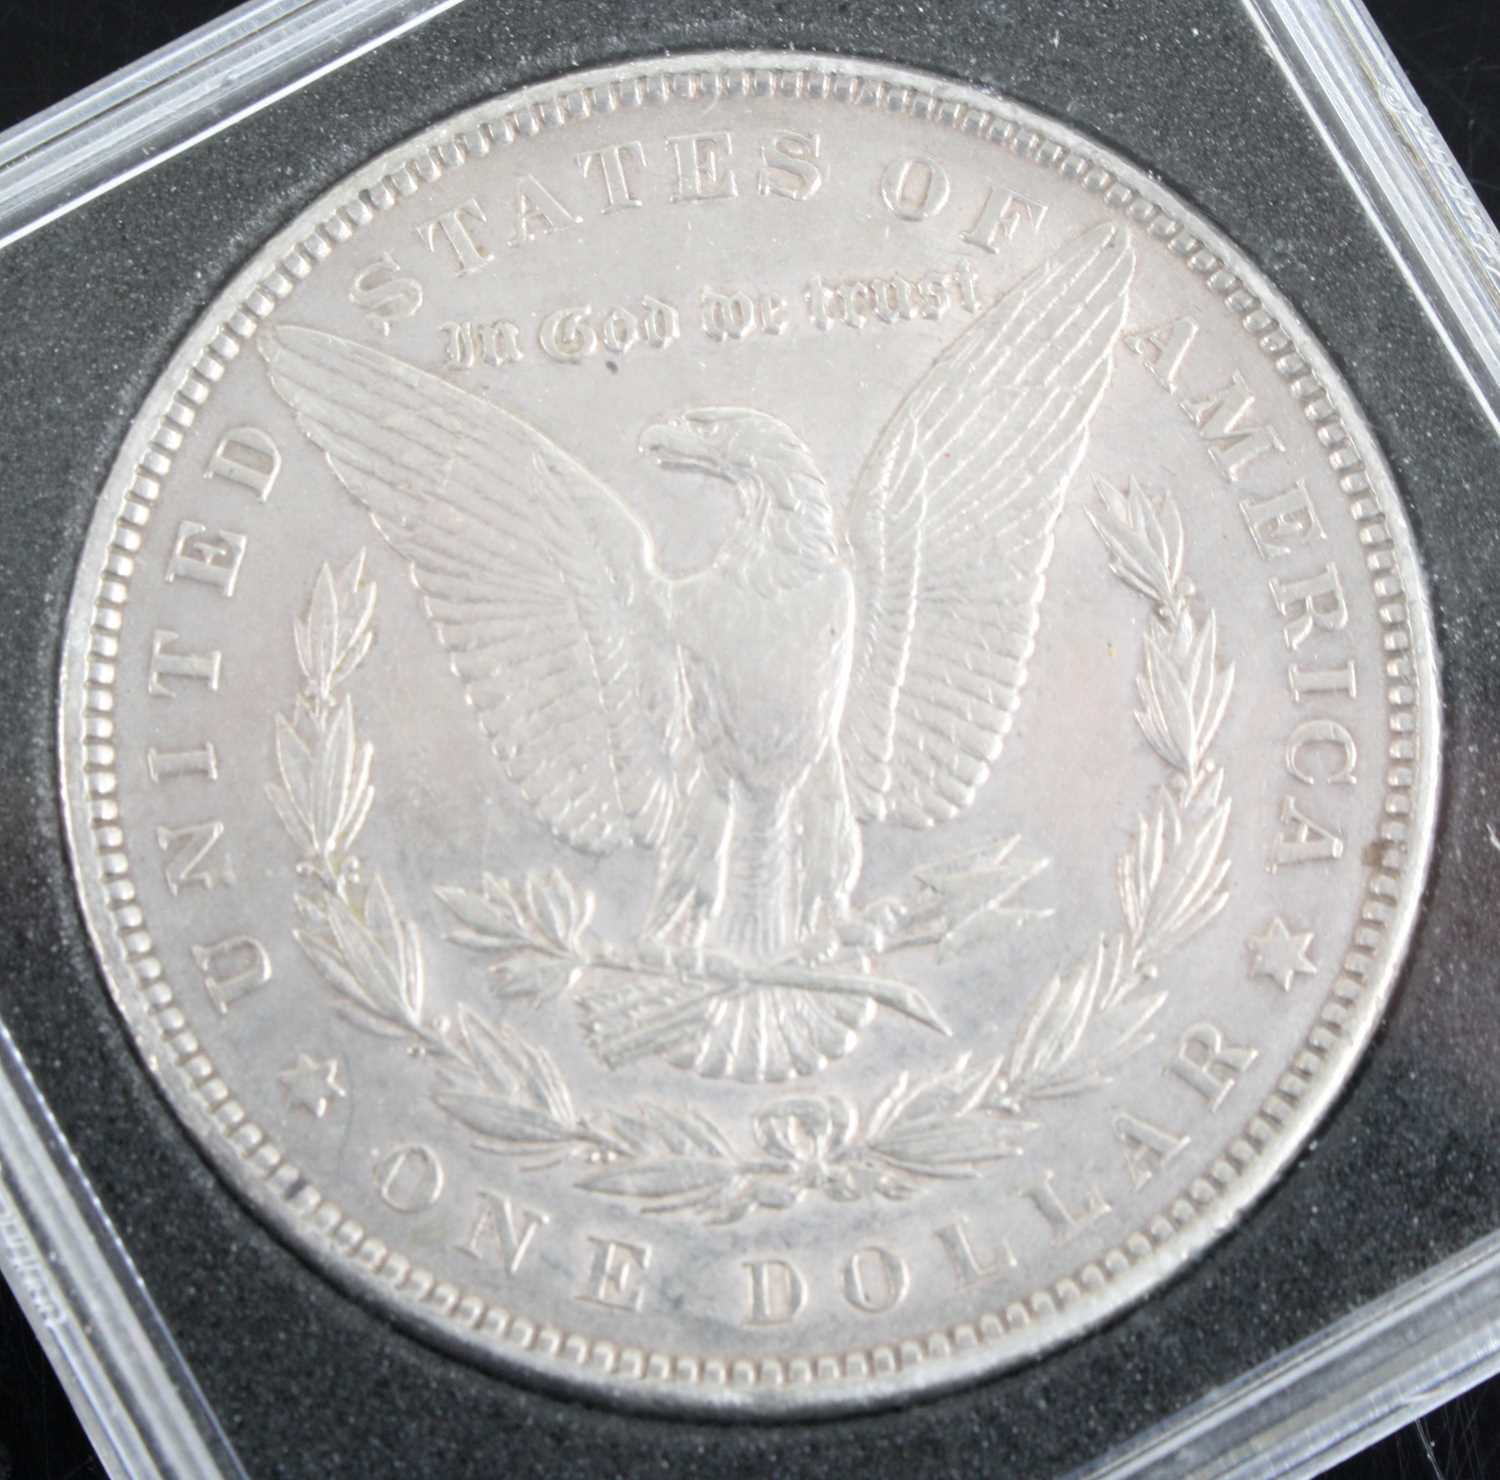 United States of America, 1886 silver Morgan dollar, obv. Liberty head above date, rev. spread eagle - Image 2 of 3